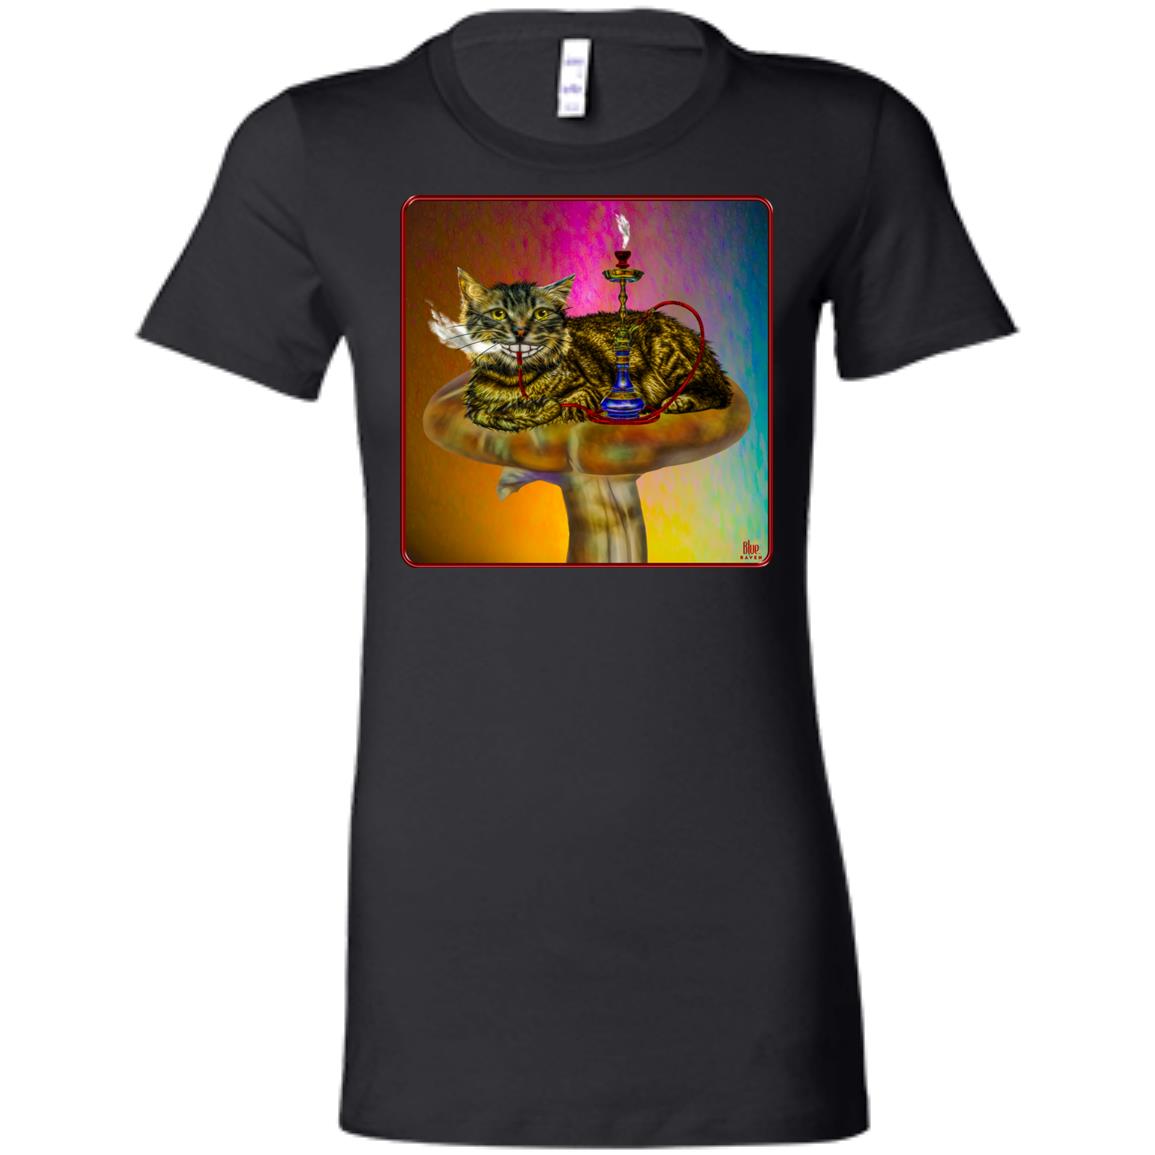 MAGIC MUSHROOM - Women's Fitted T-Shirt